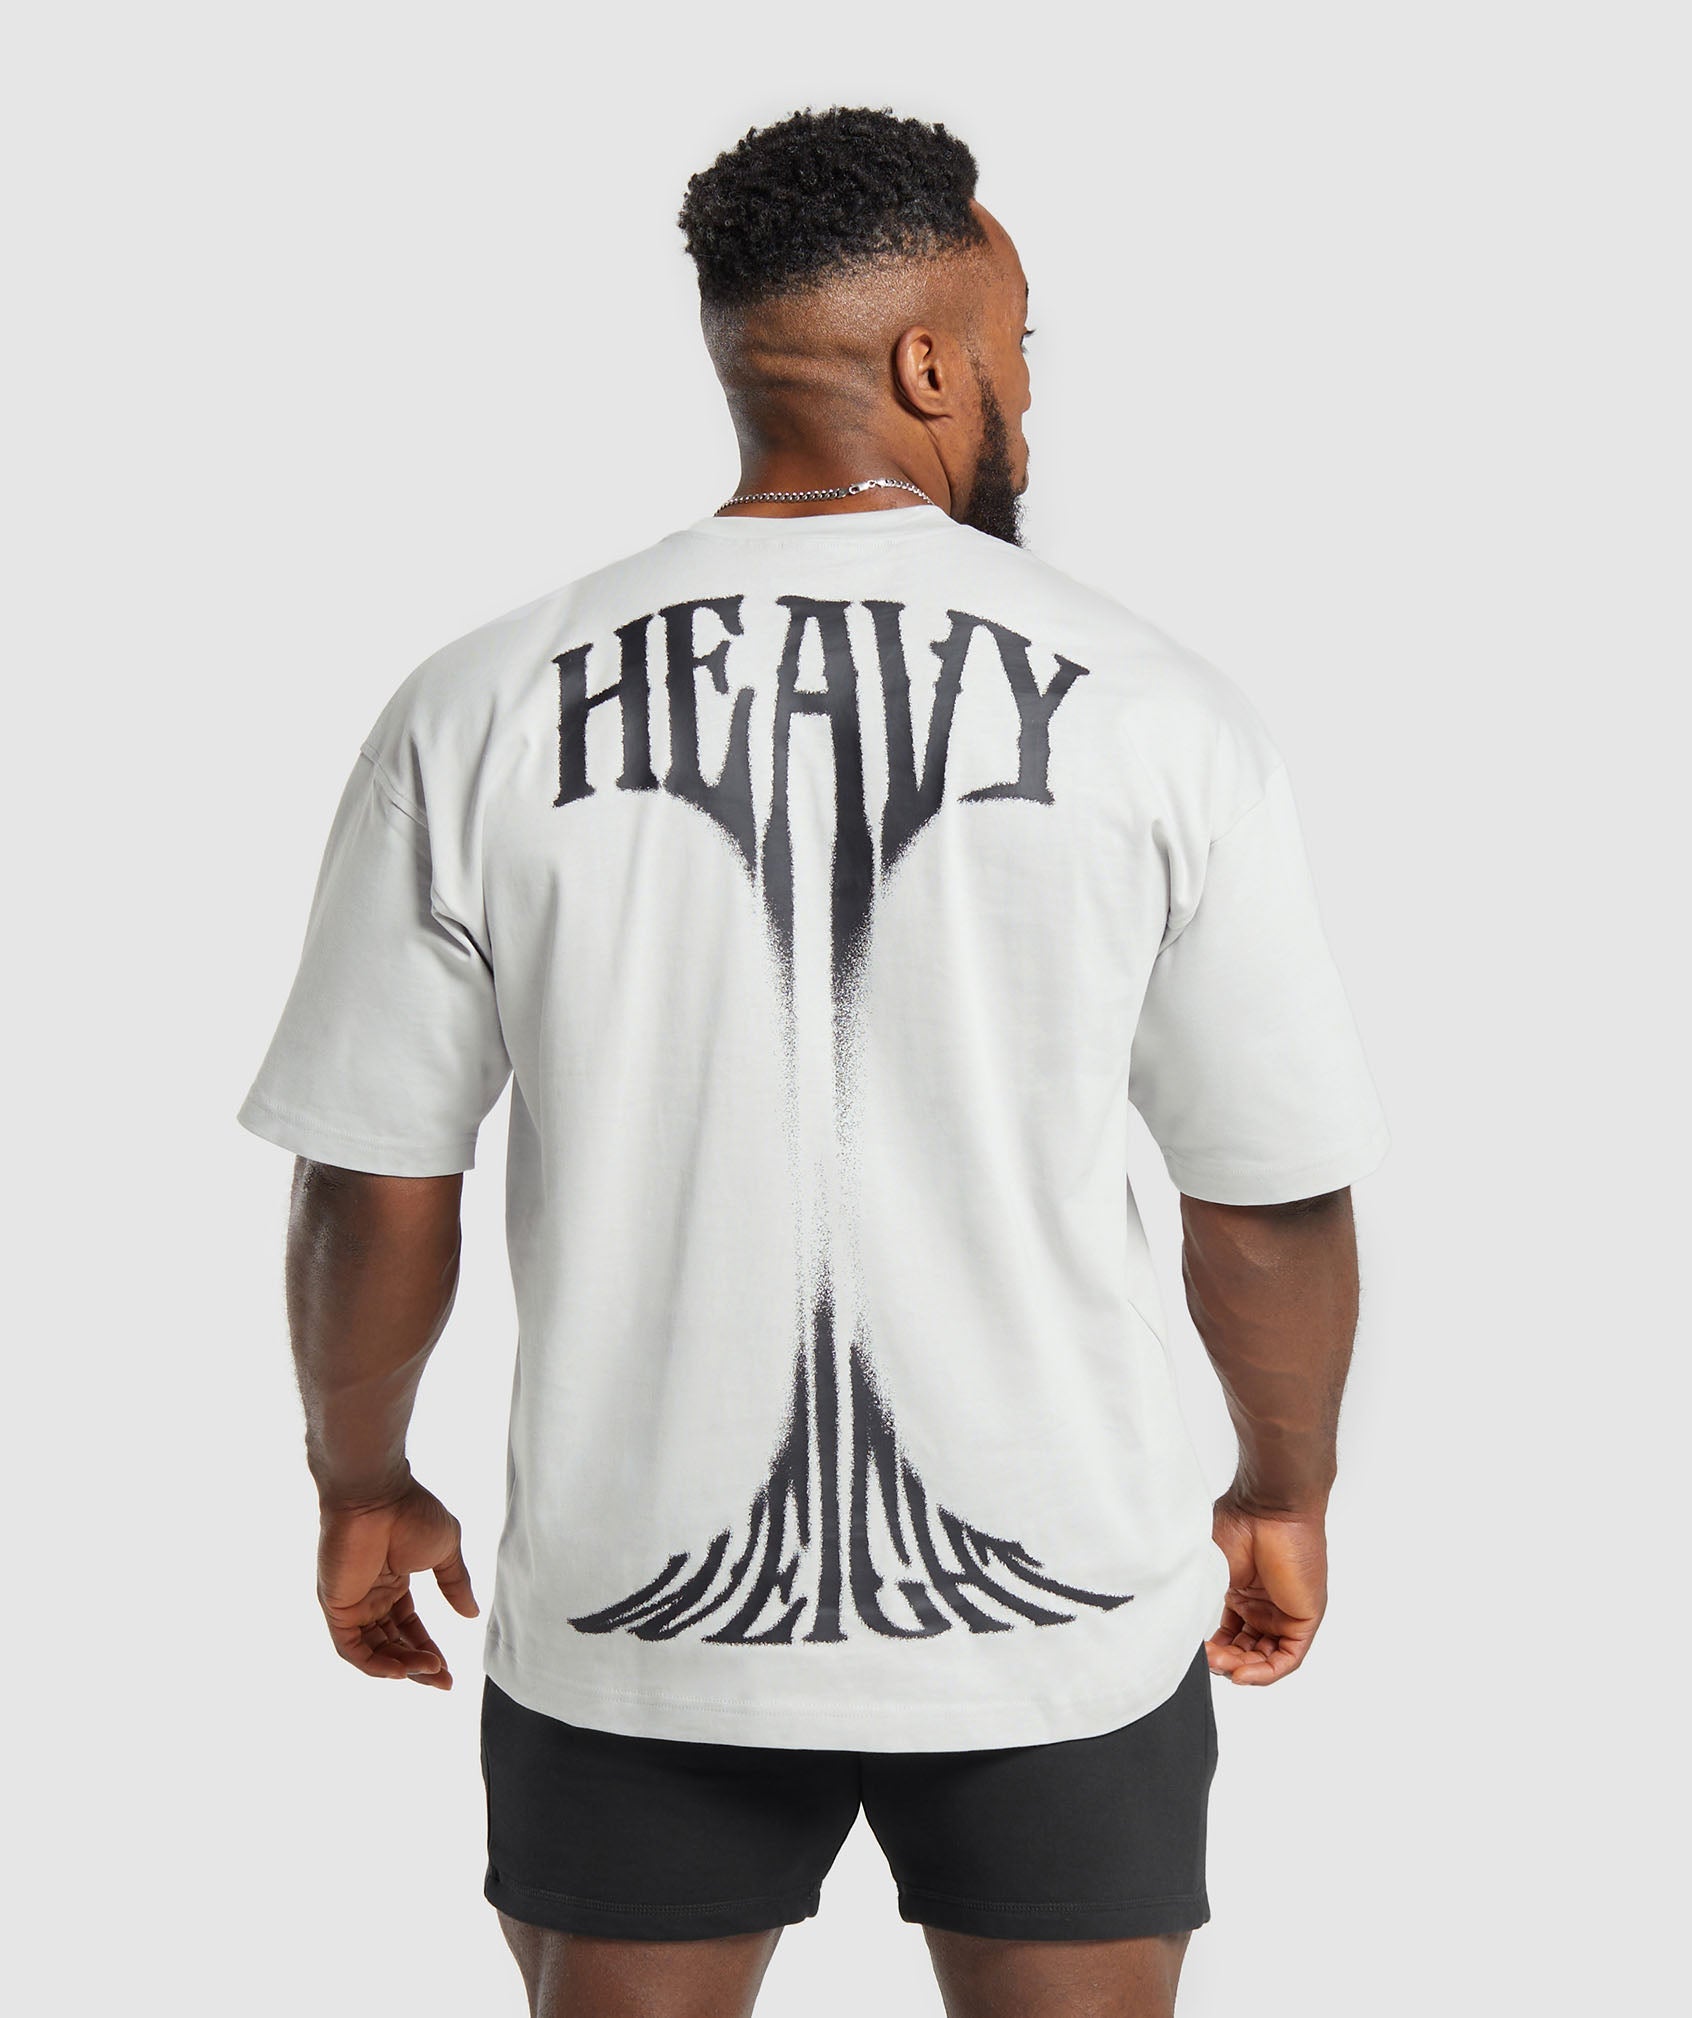 Heavy Weight Graphic T-Shirt